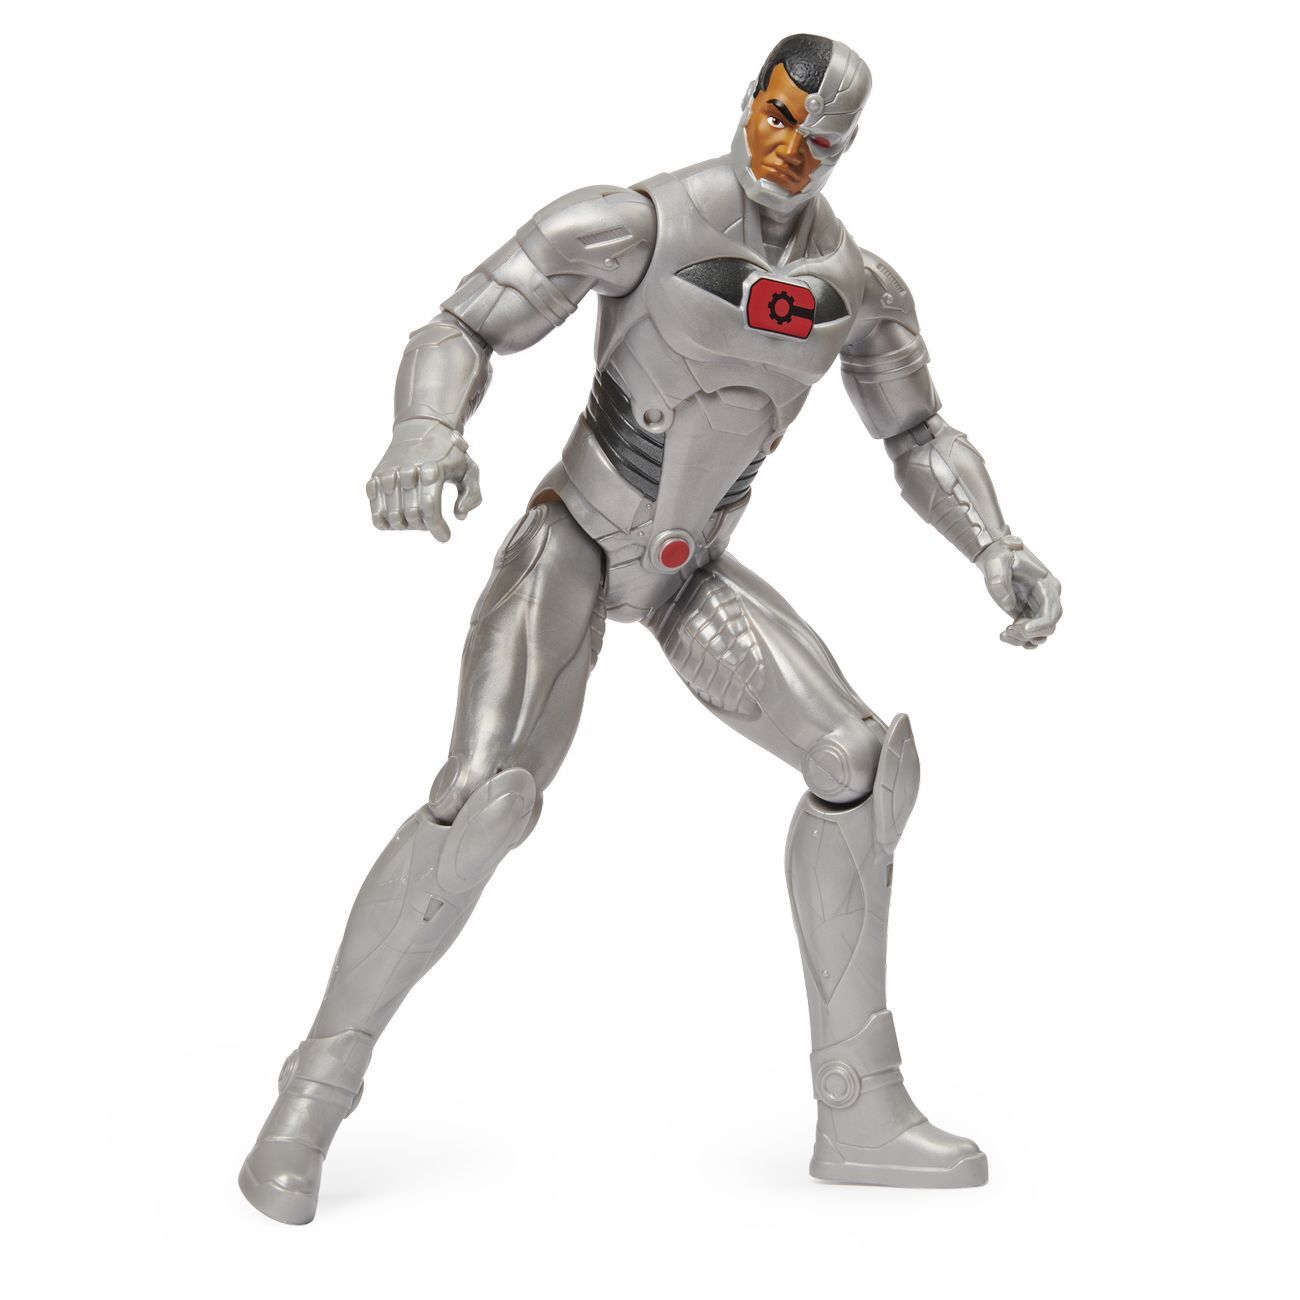 DC Comics Action Figure - Cyborg